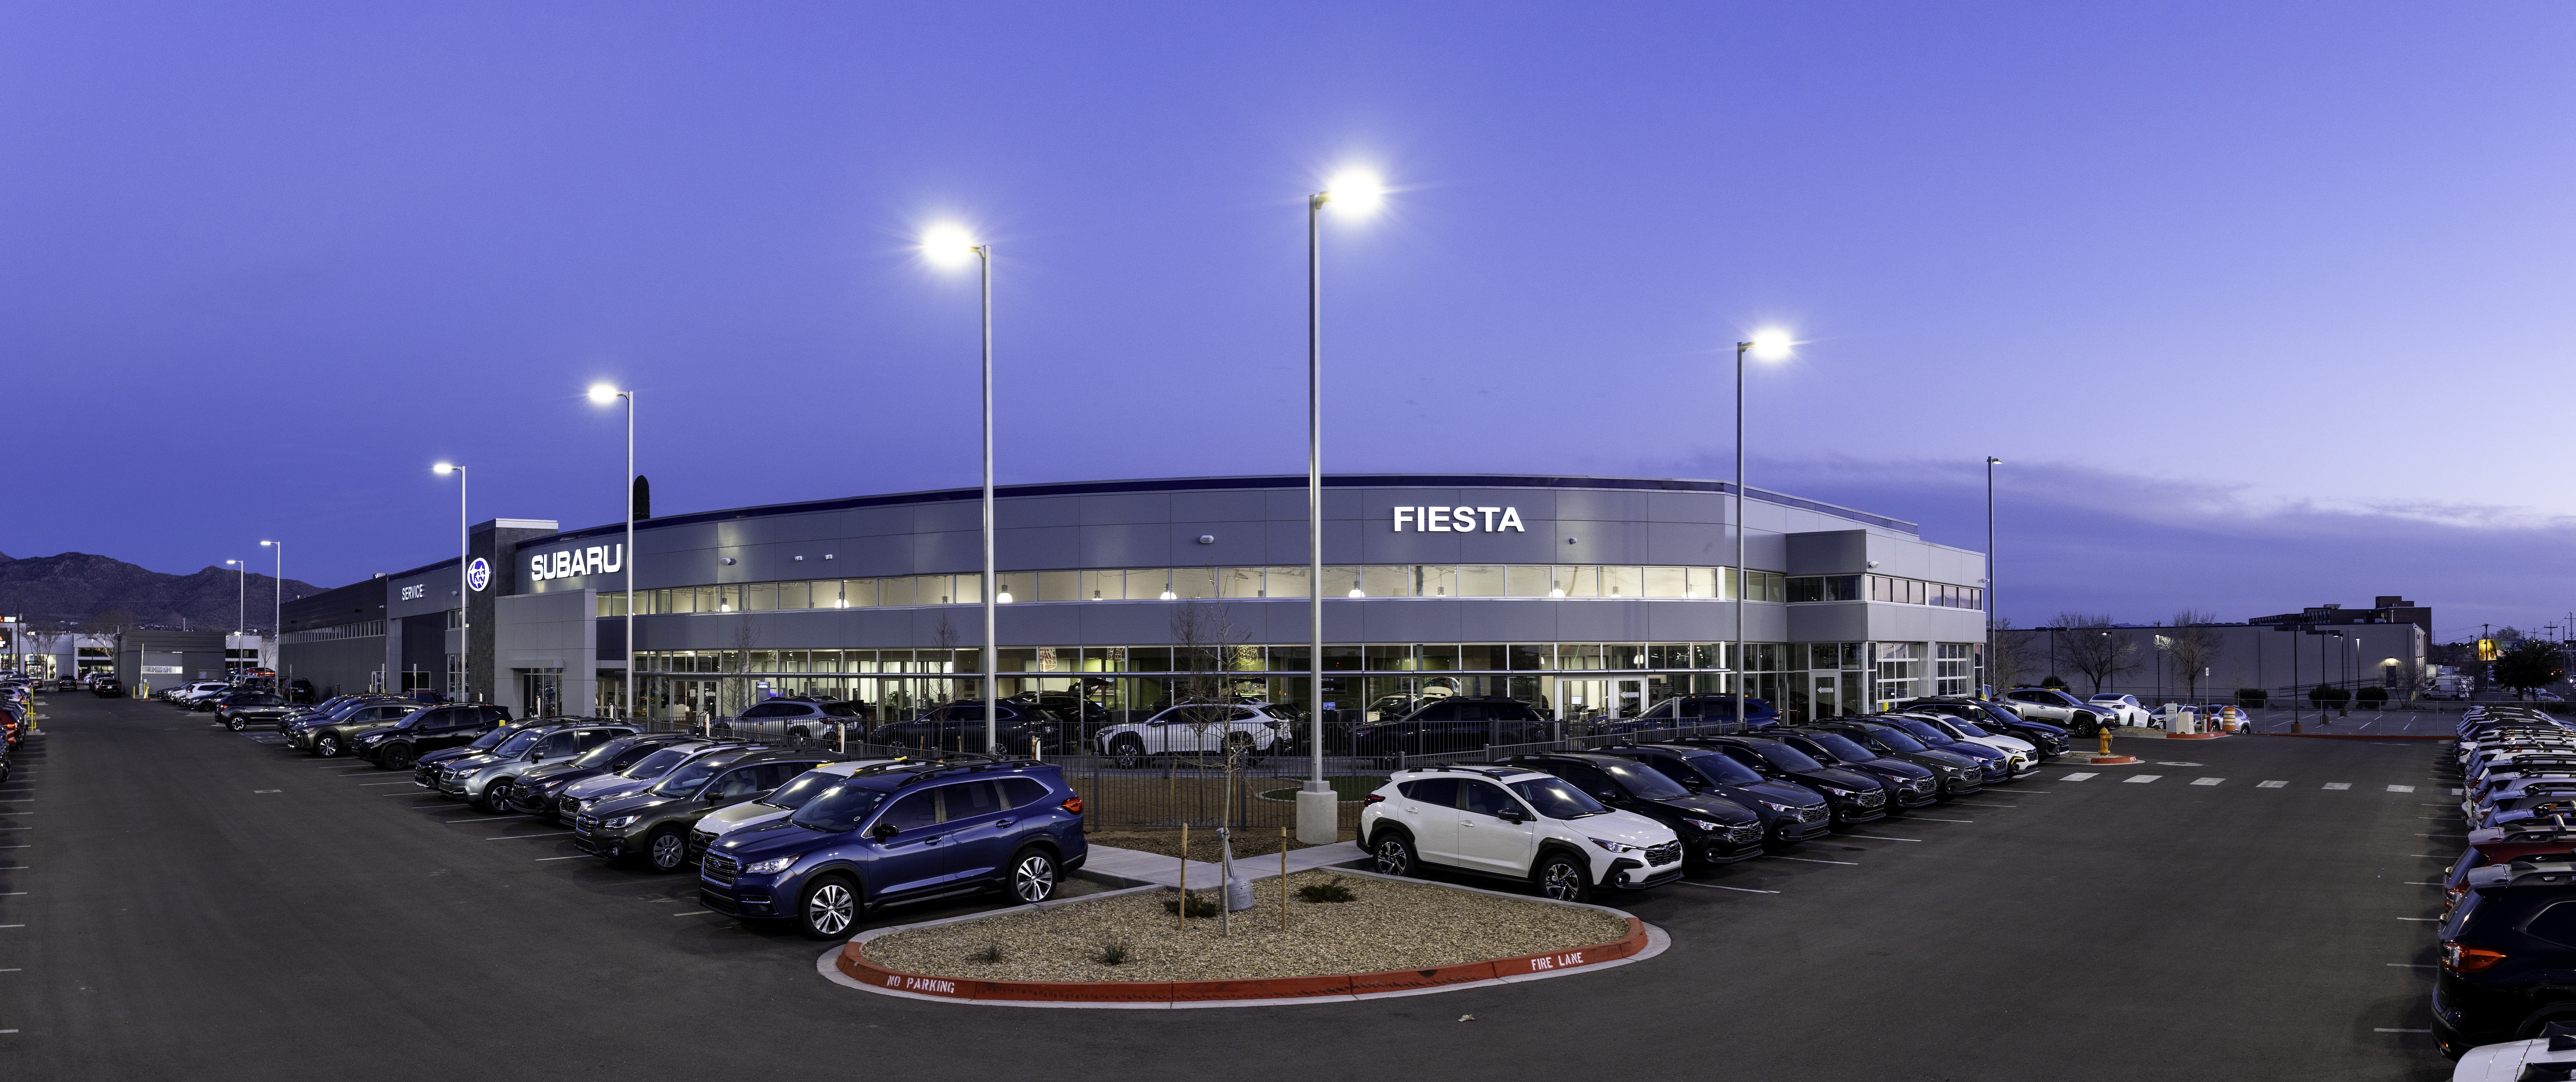 External view of Fiesta Subaru Albuquerque NM